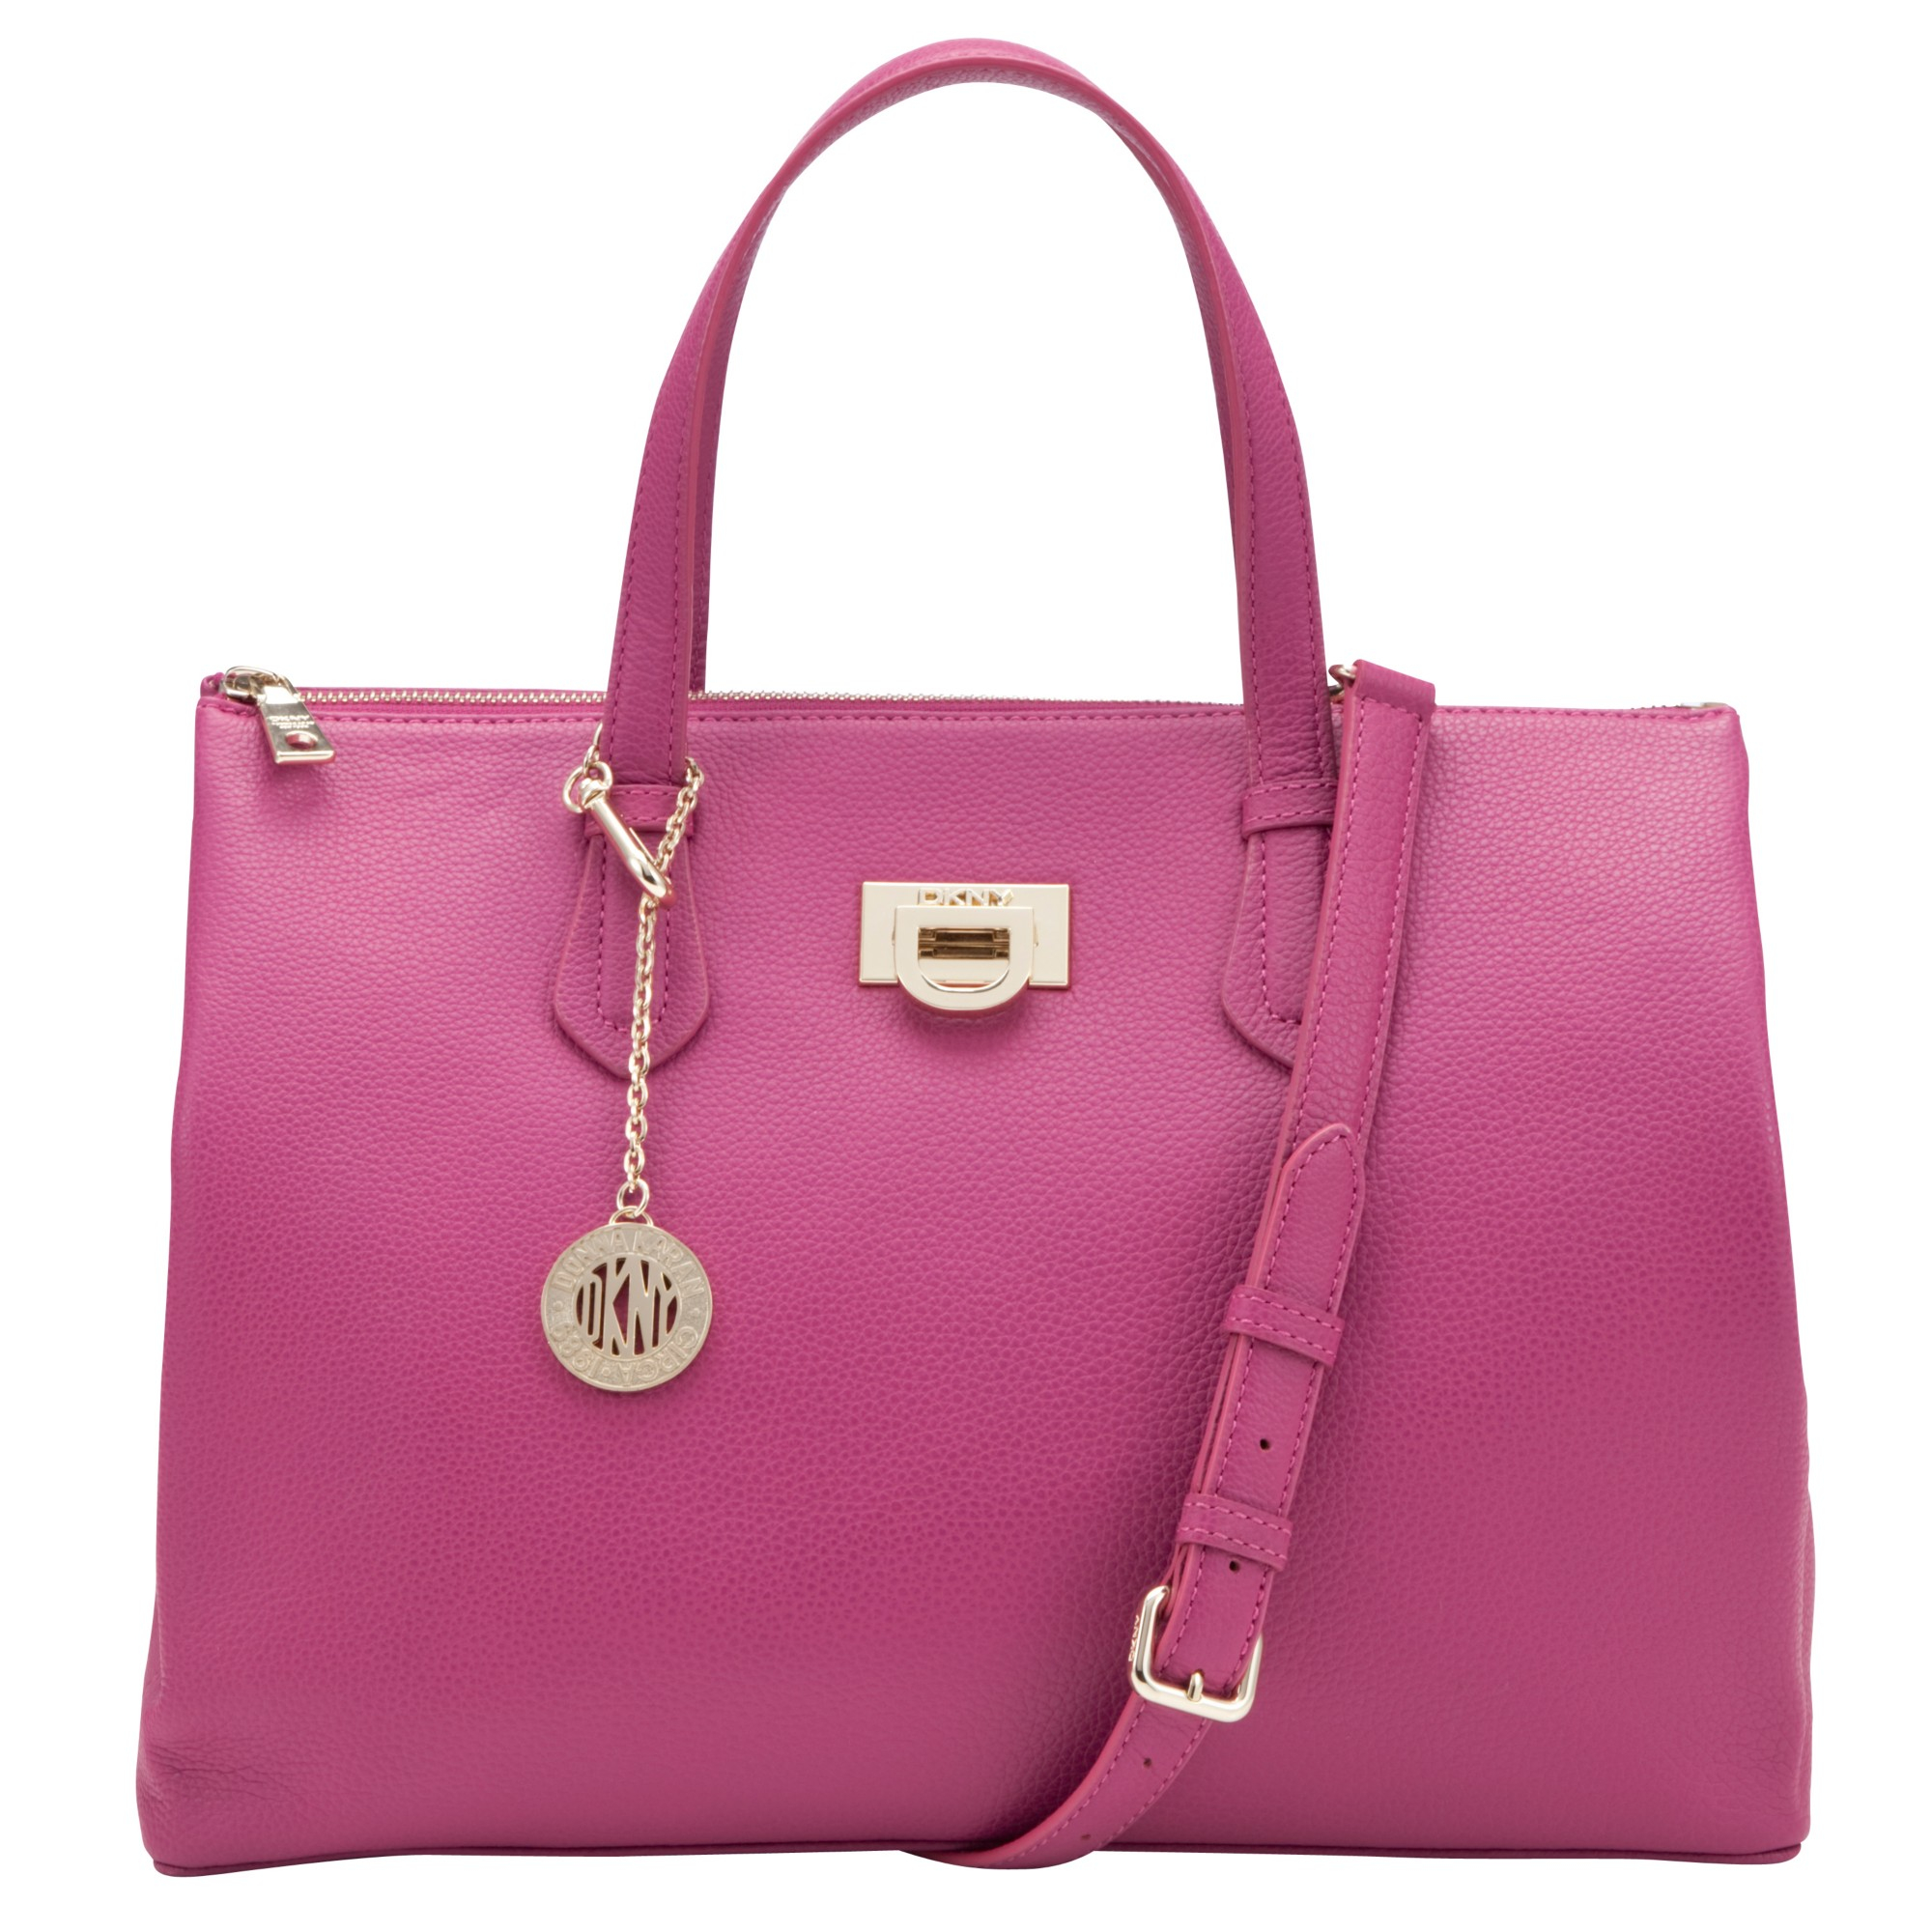 Dkny Vintage Large Shopper Handbag in Purple (Raspberry) | Lyst